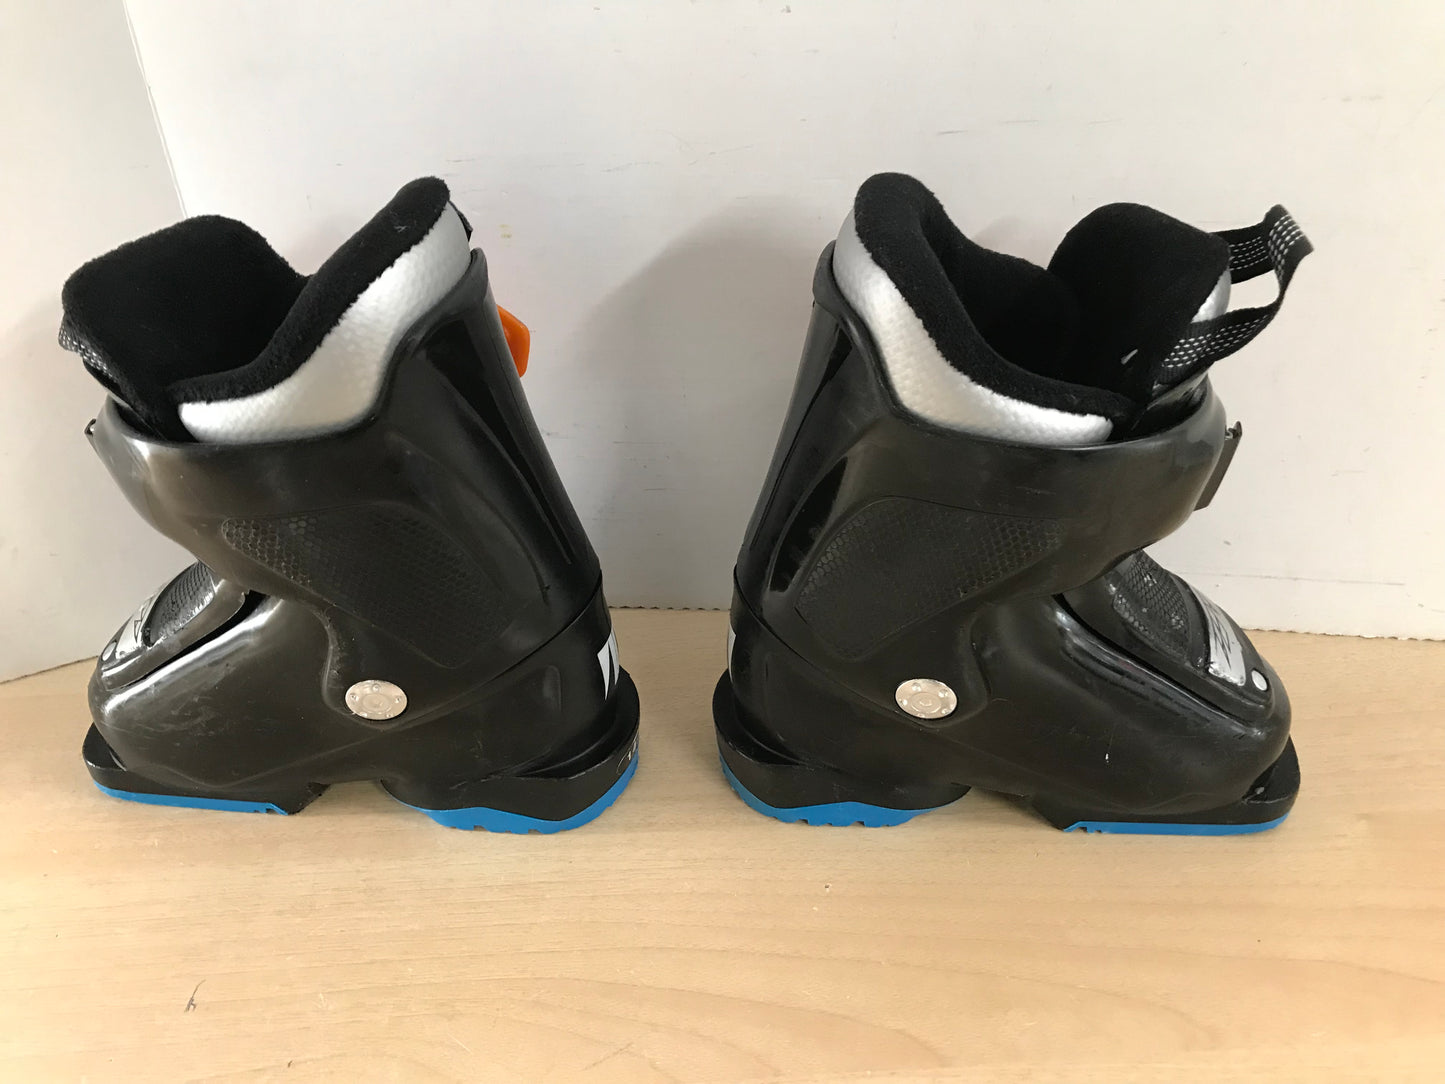 Ski Boots Mondo Size 14.5 Child Size 8 Toddler 195 mm Tecnica Cochise Black Orange Blue New